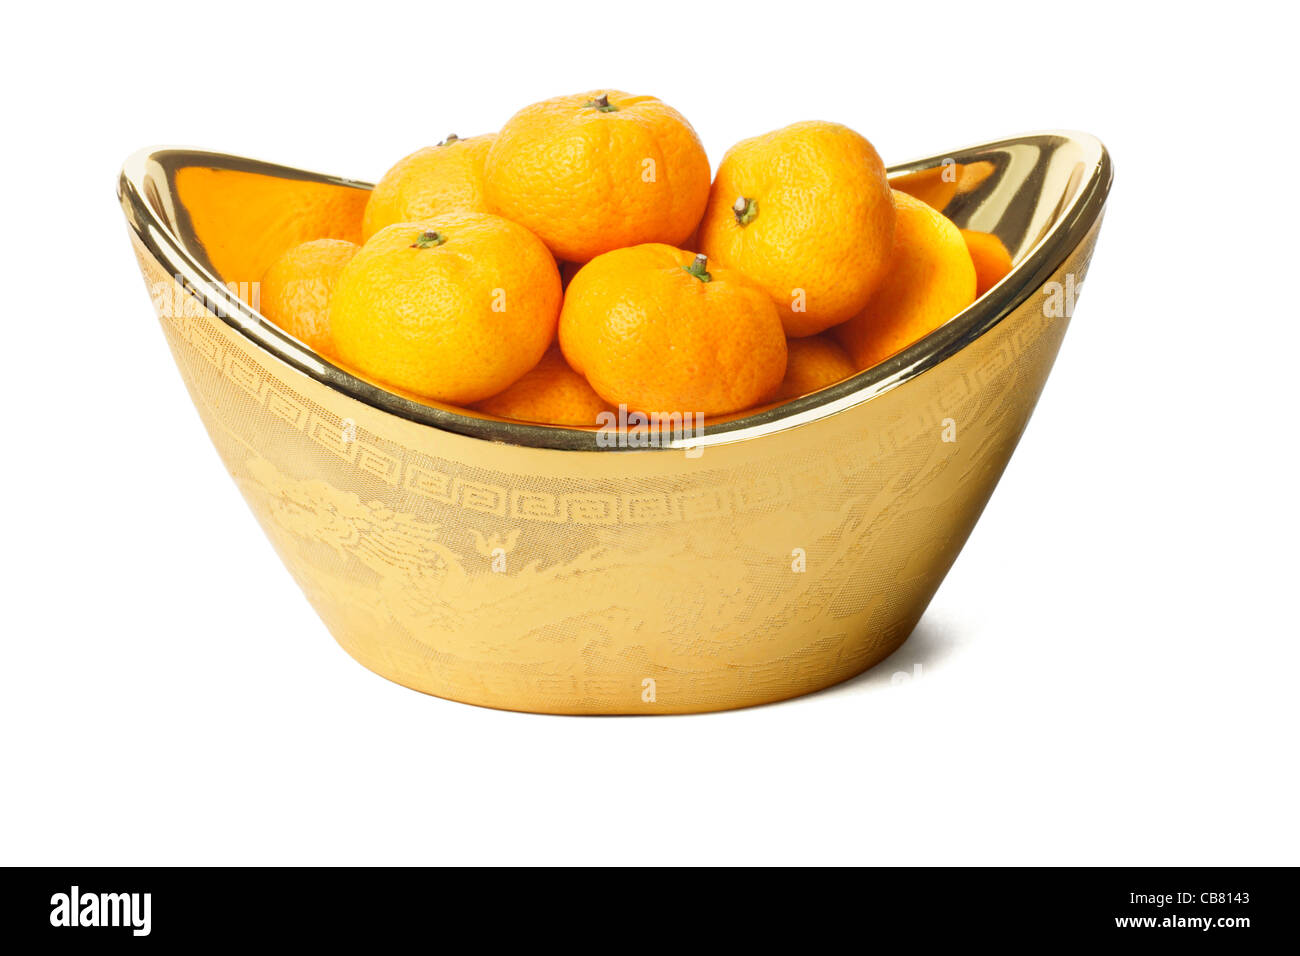 Mandarin oranges in gold ingot container on white background Stock Photo